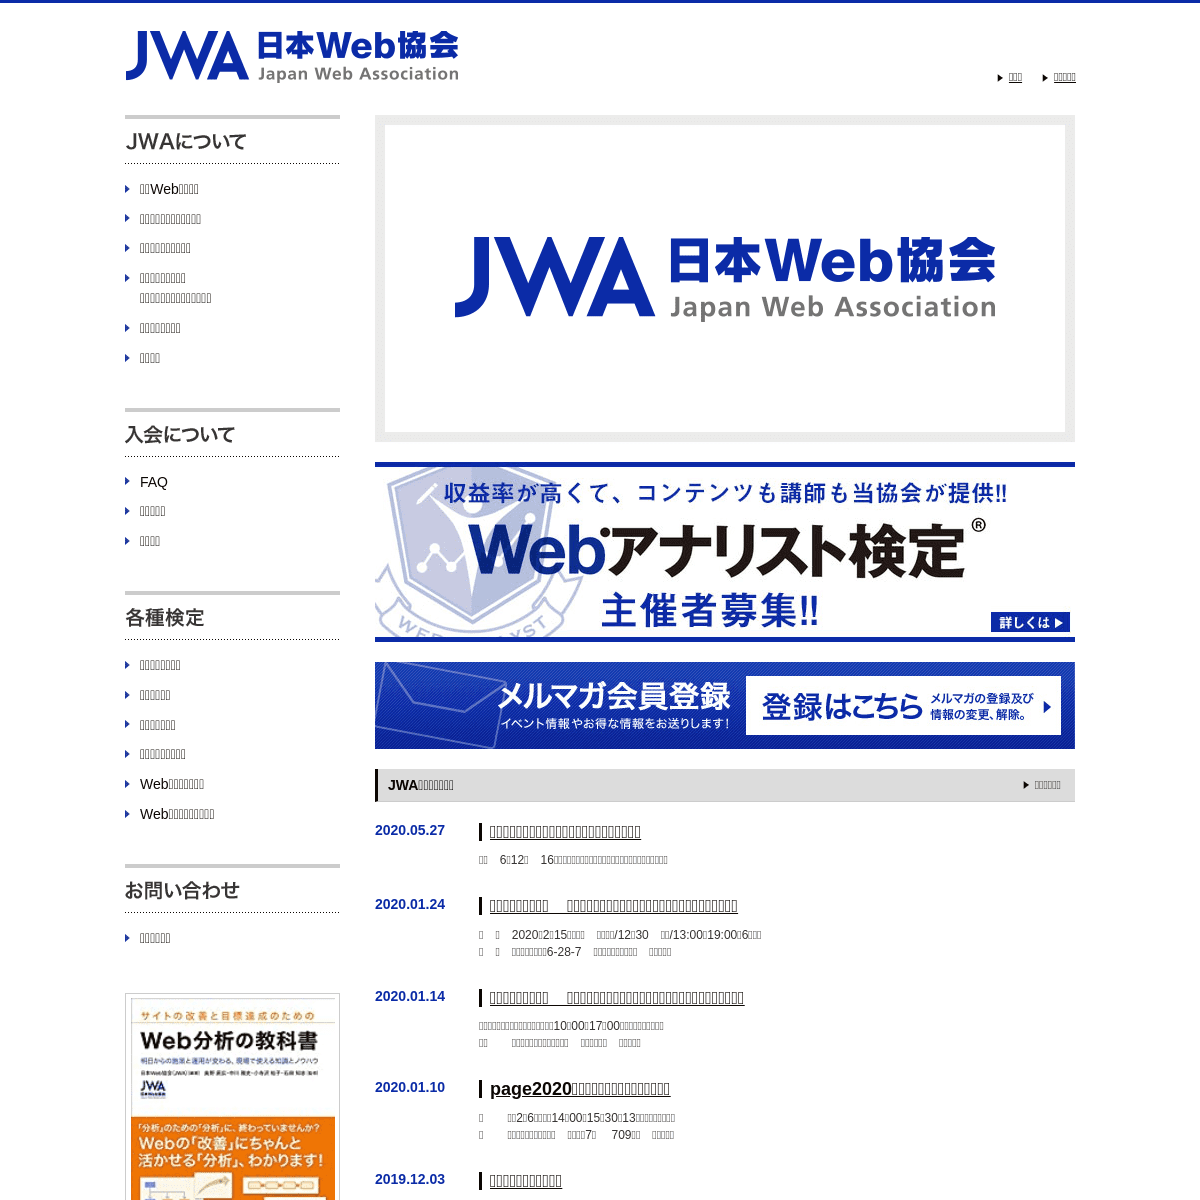 A complete backup of https://jwa-org.jp